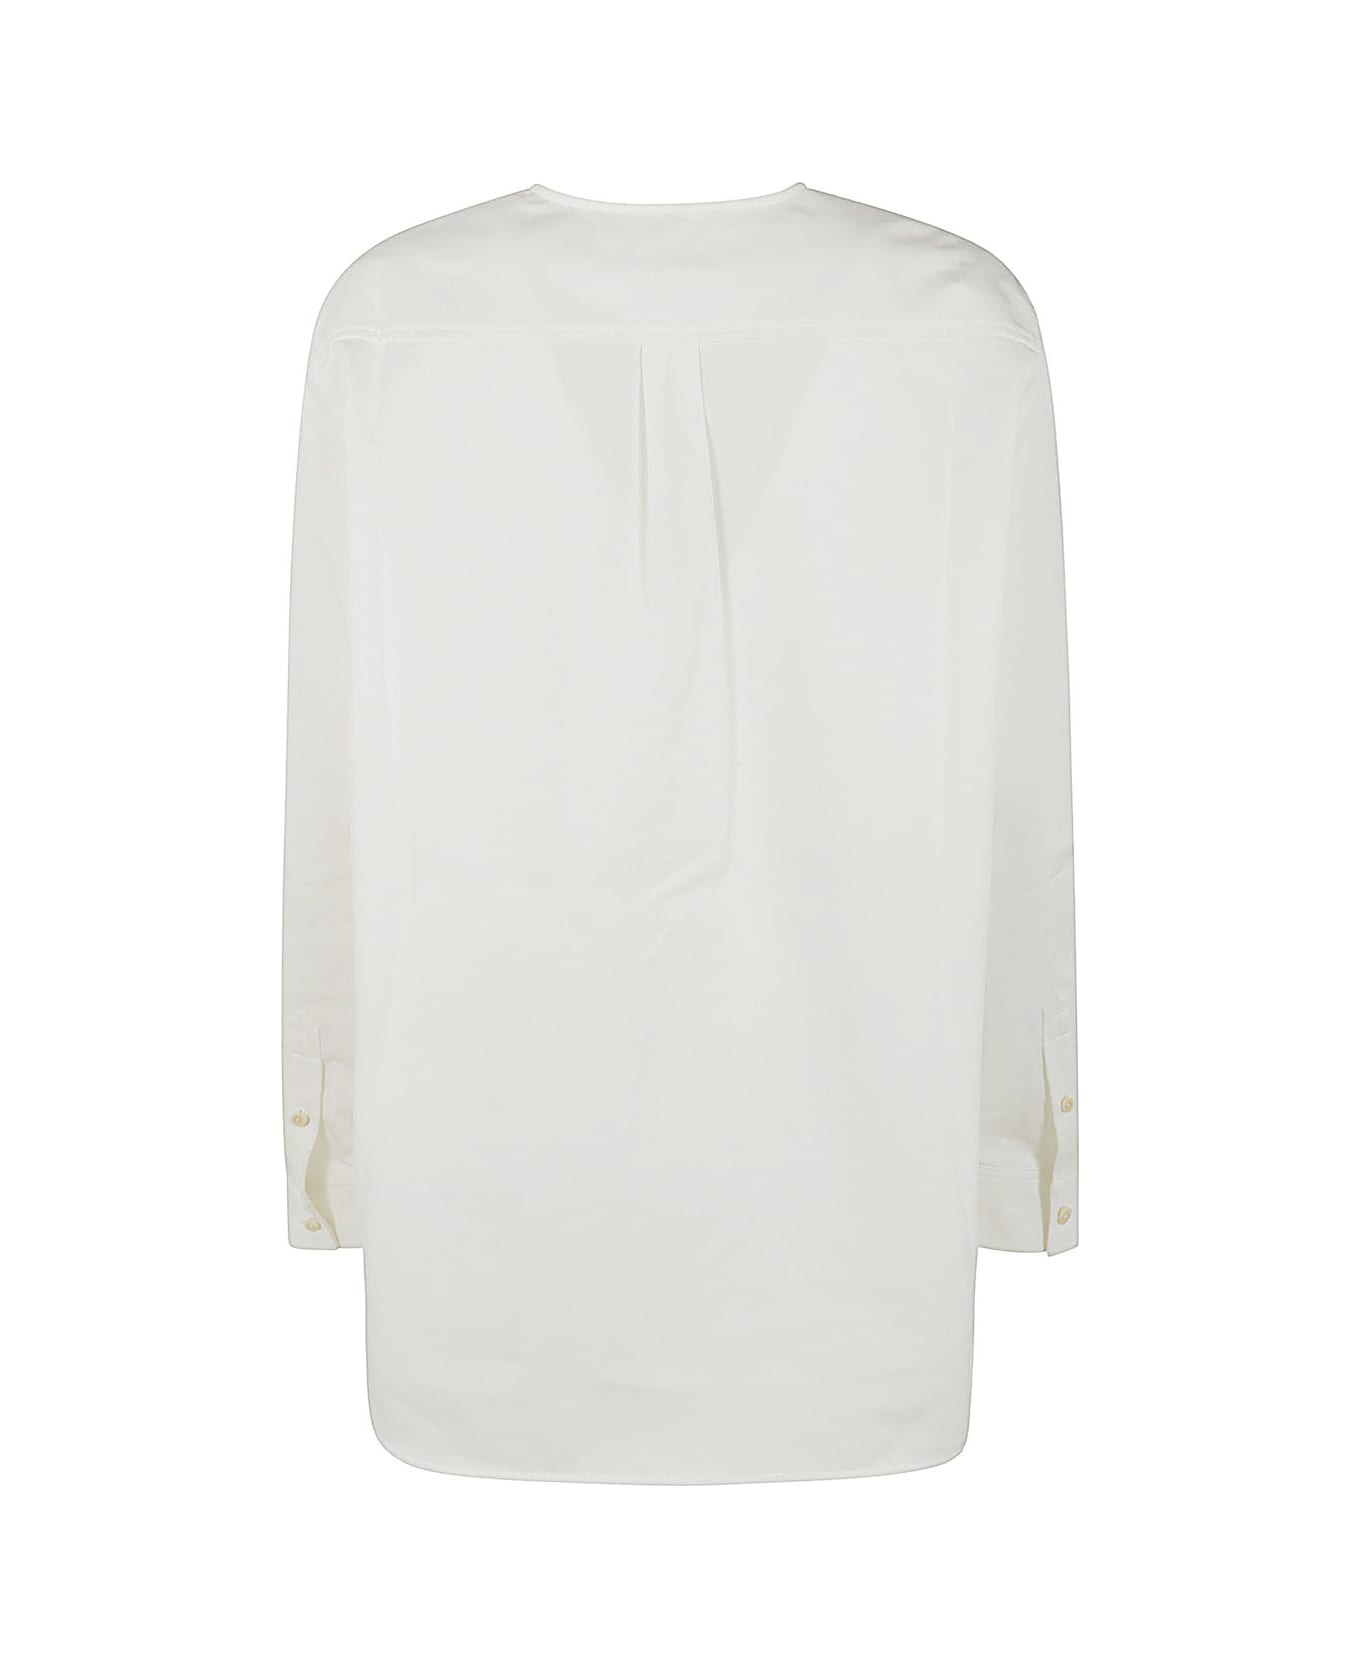 Totême Collarless Cotton Twill Shirt - White